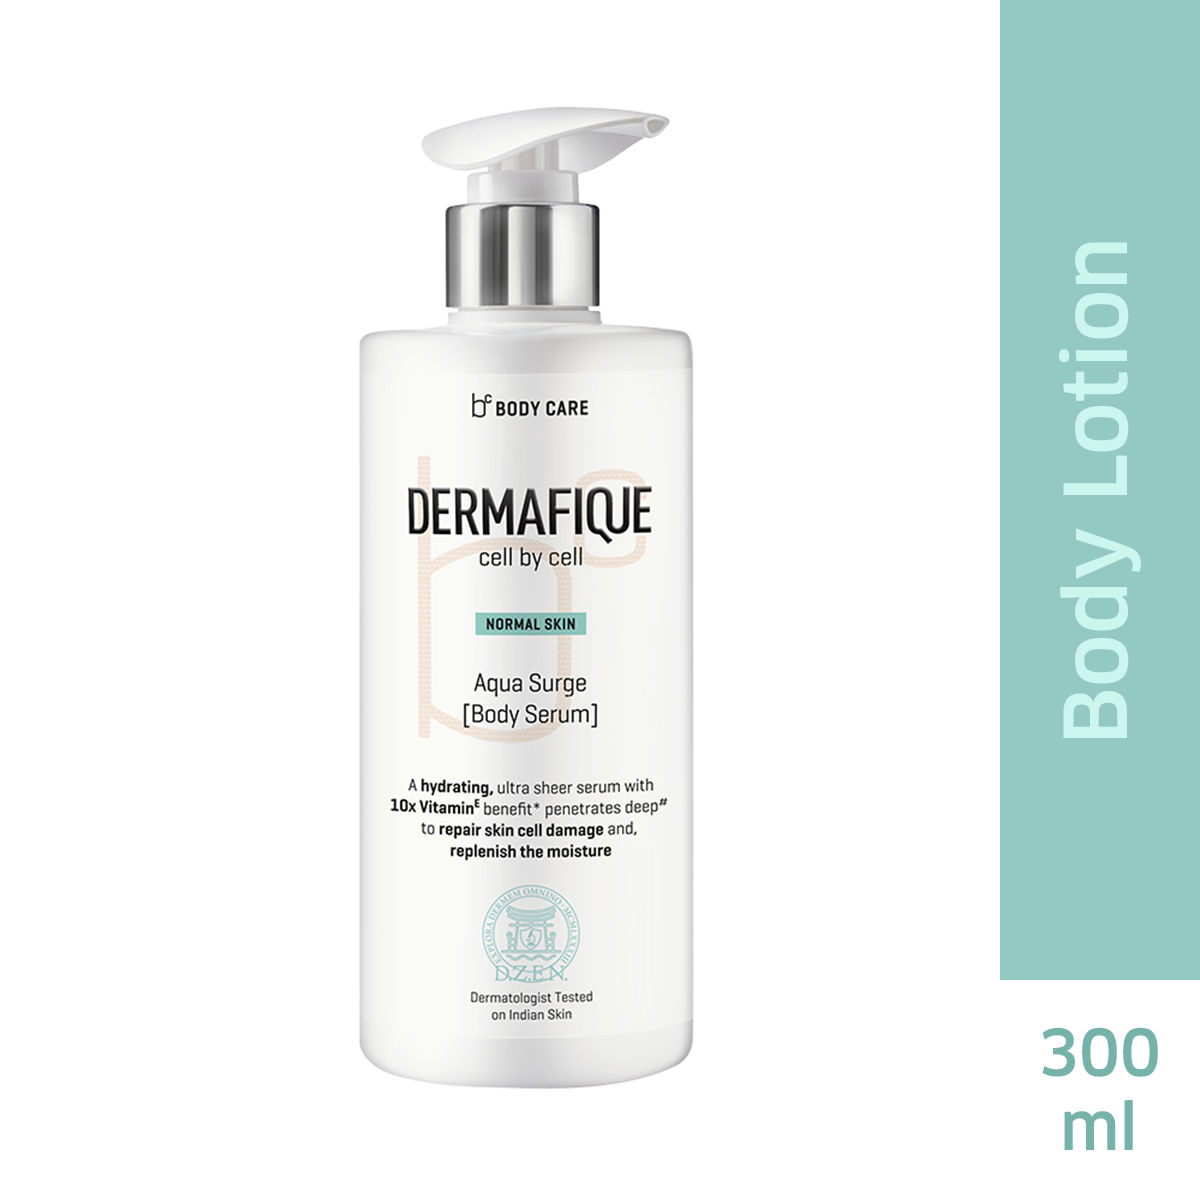 Dermafique Aquasurge Body Serum, Body Lotion with 10x Vitamin E, Moisturizes & Repairs Skin